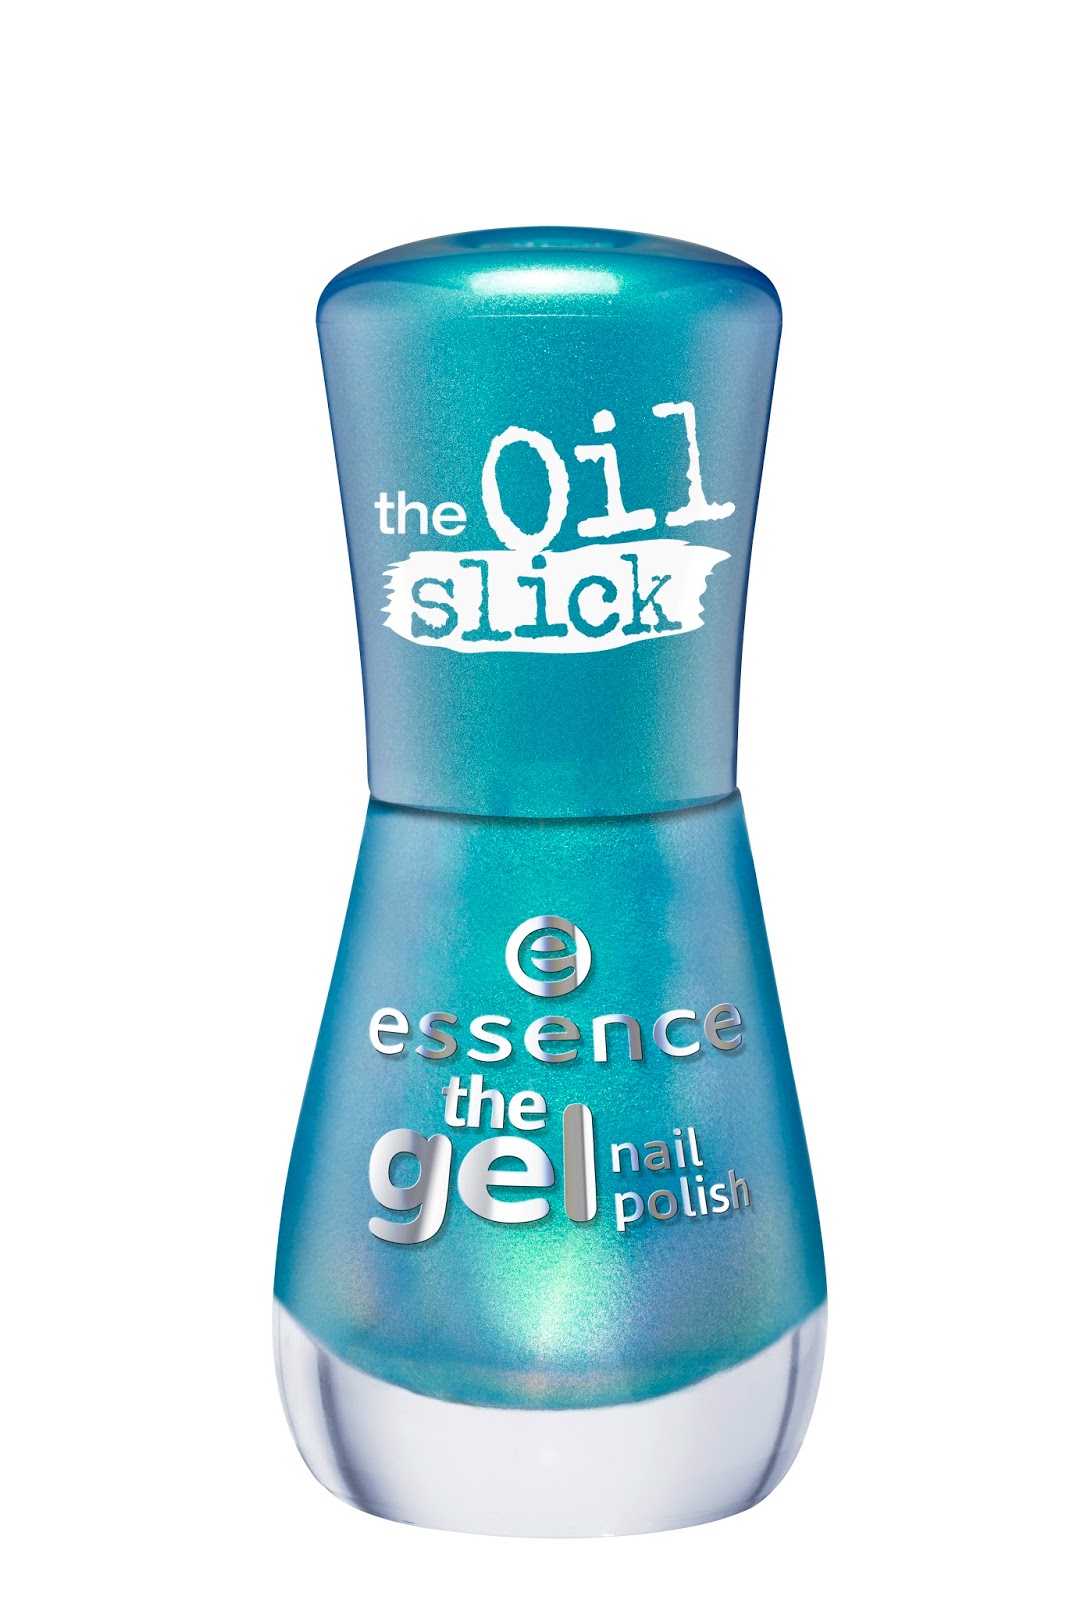 Essence the gel nail polish